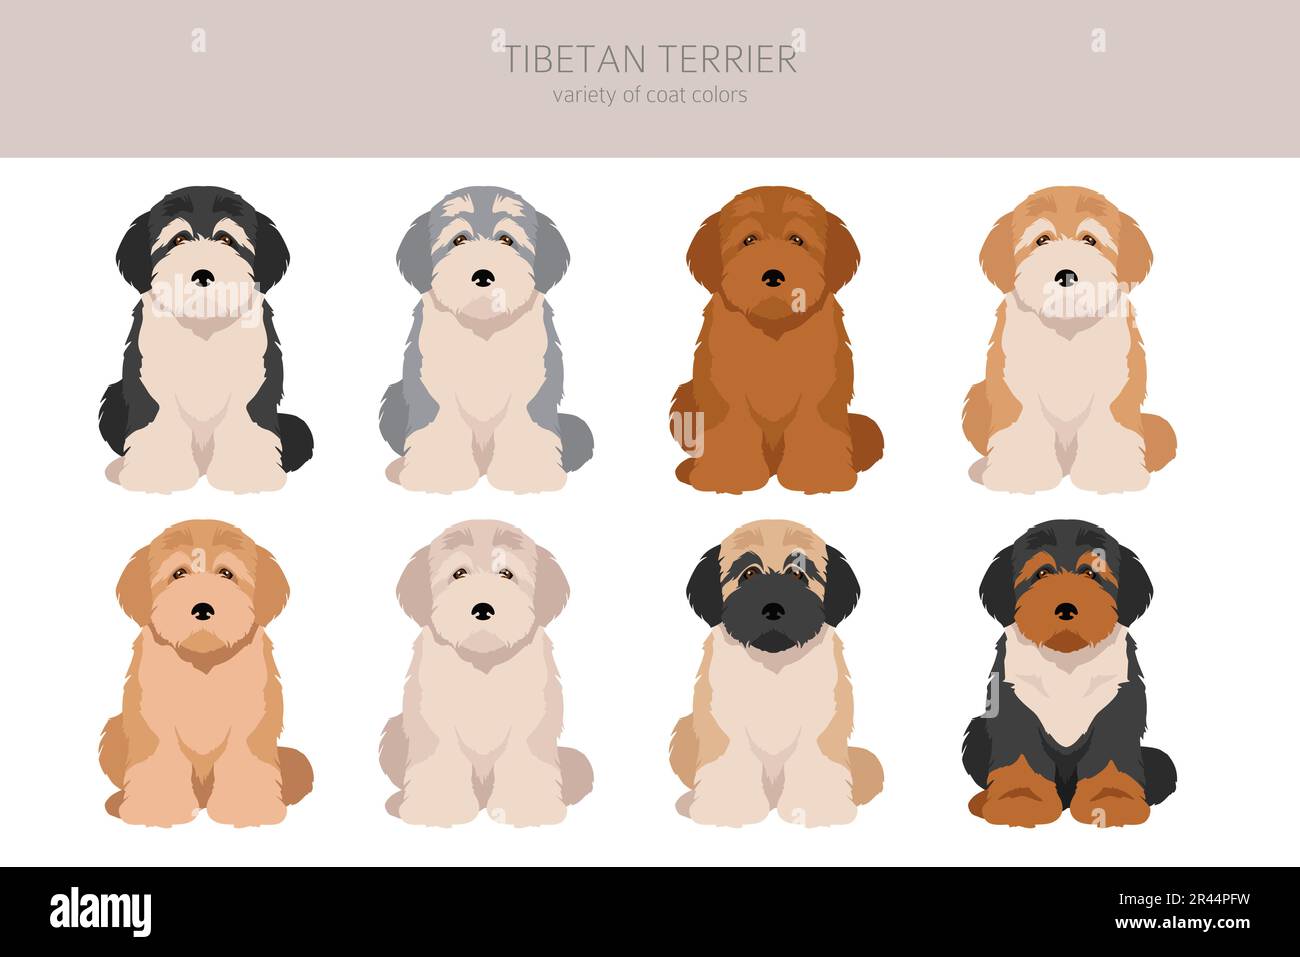 Tibetan terrier puppy clipart. Different poses, coat colors set.  Vector illustration Stock Vector